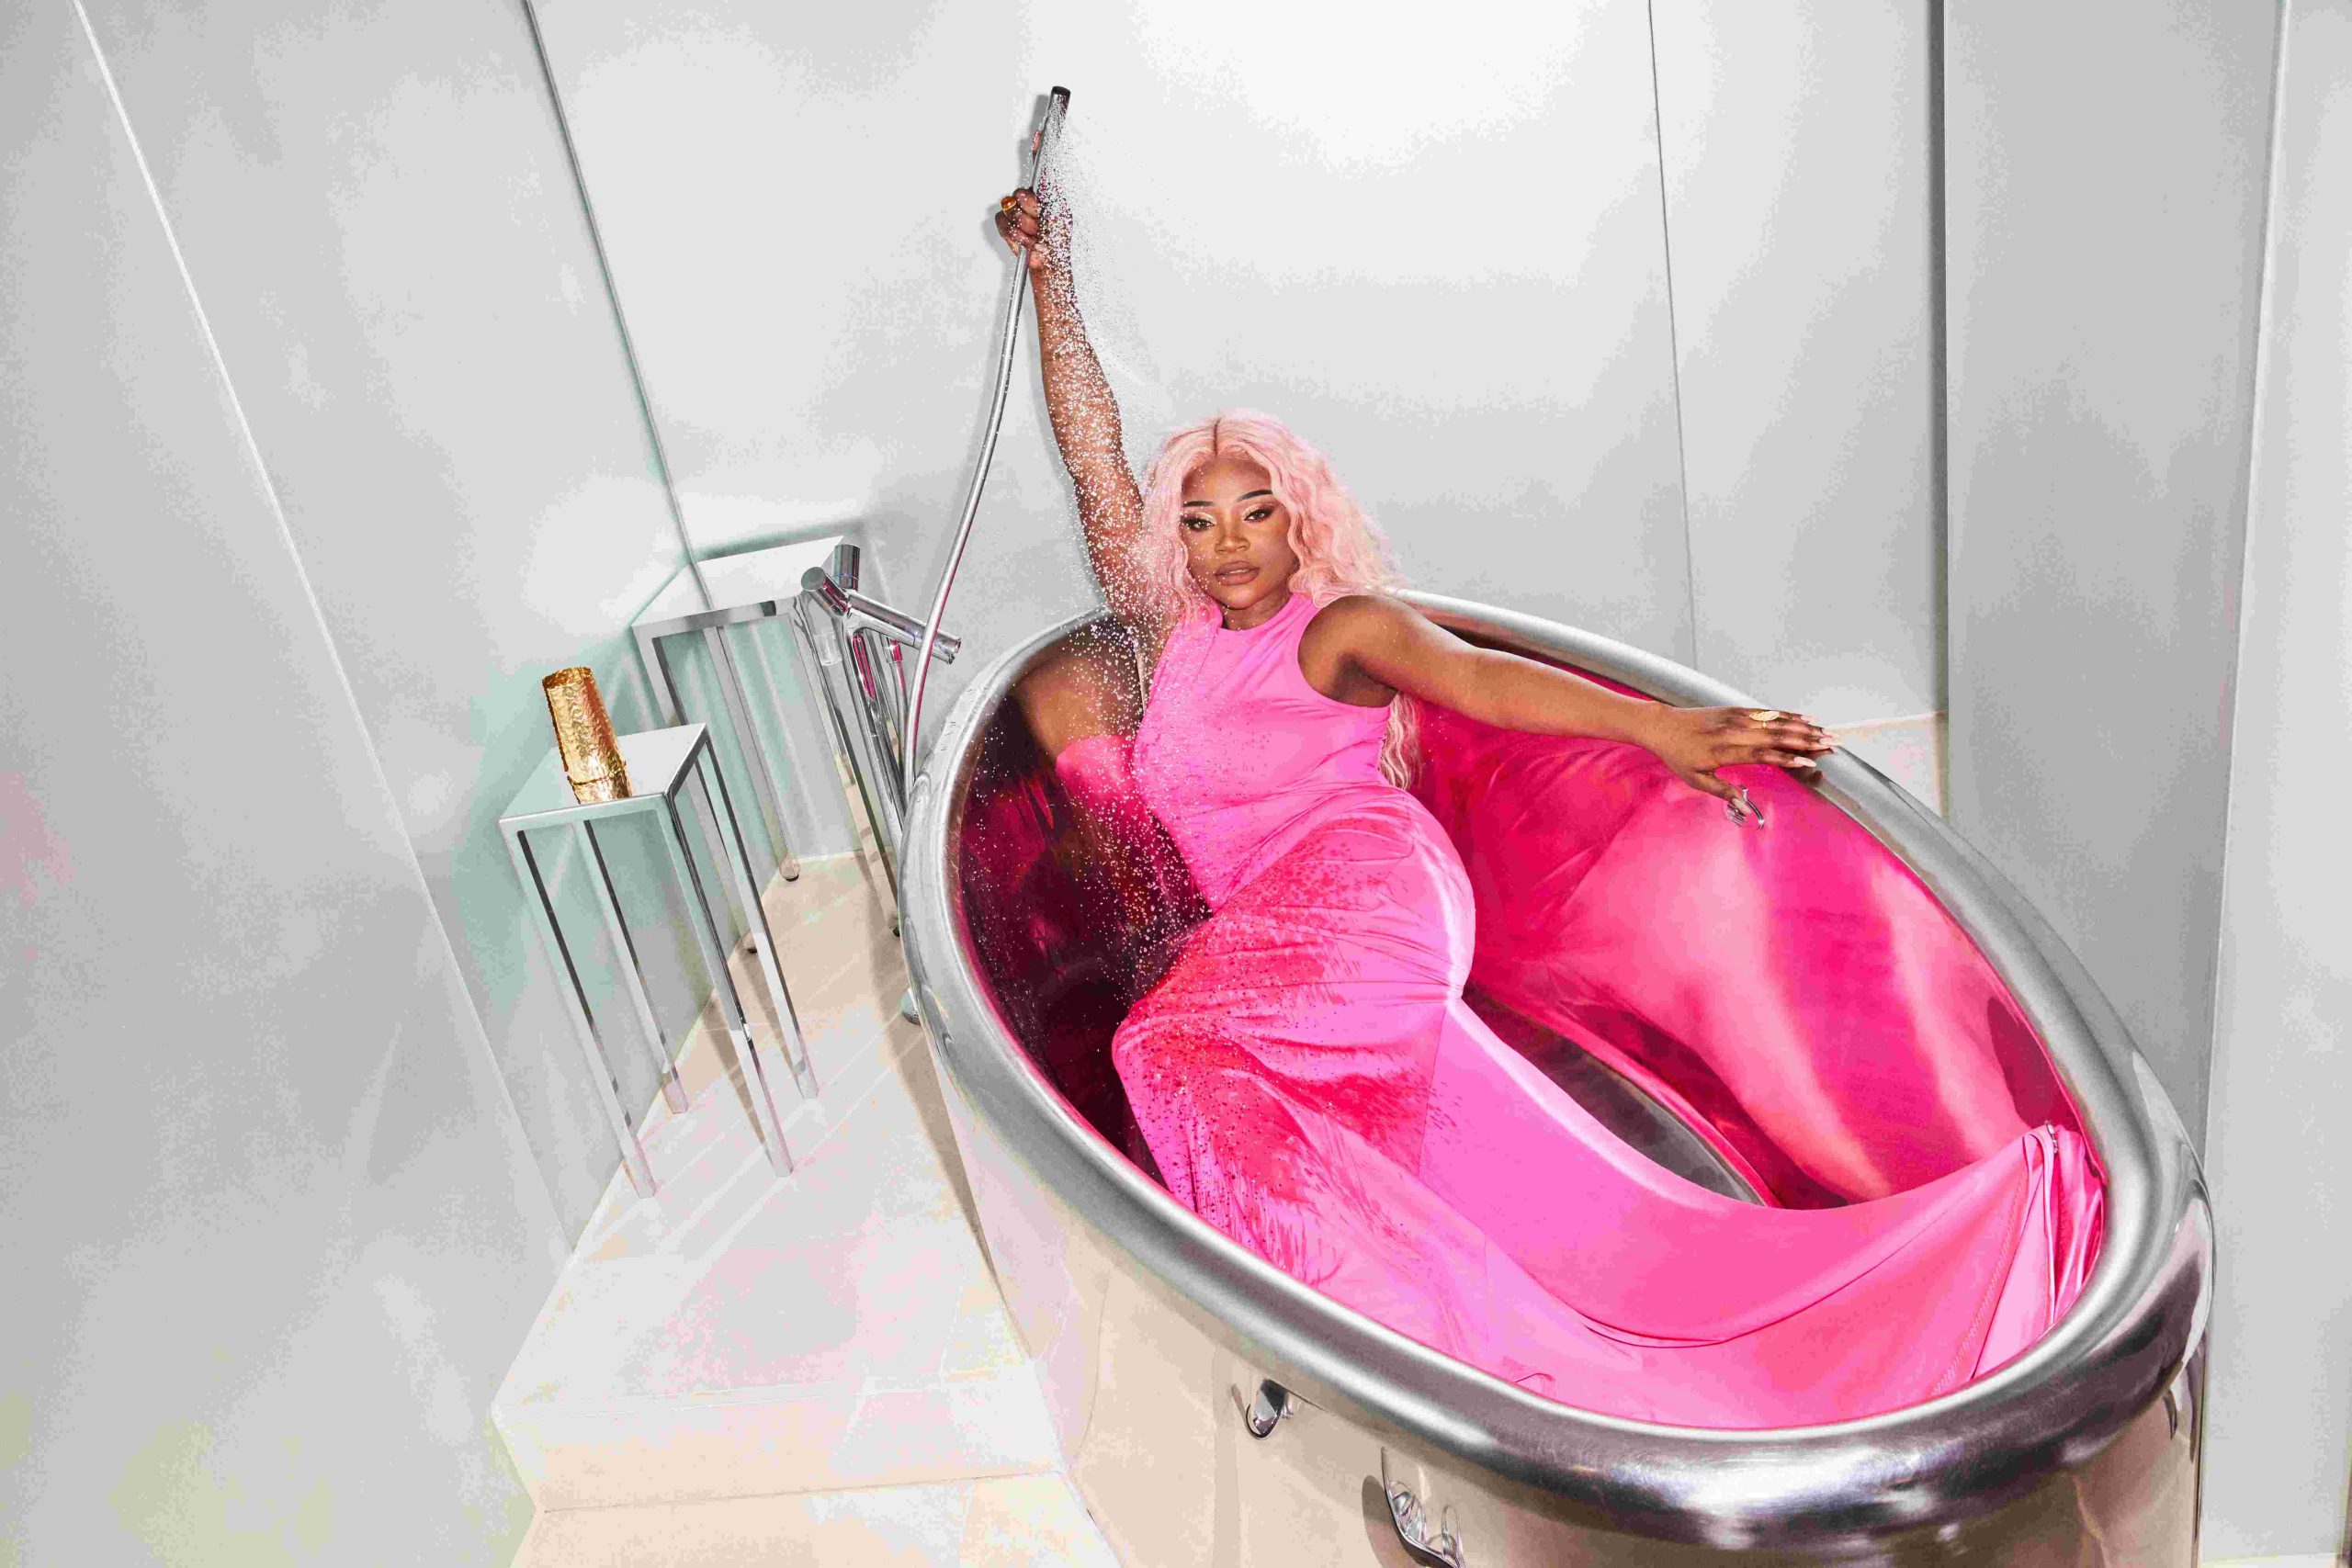 Juliette Fox in pink dress laying in silver bath tub spraying water on herself at Sanderson London